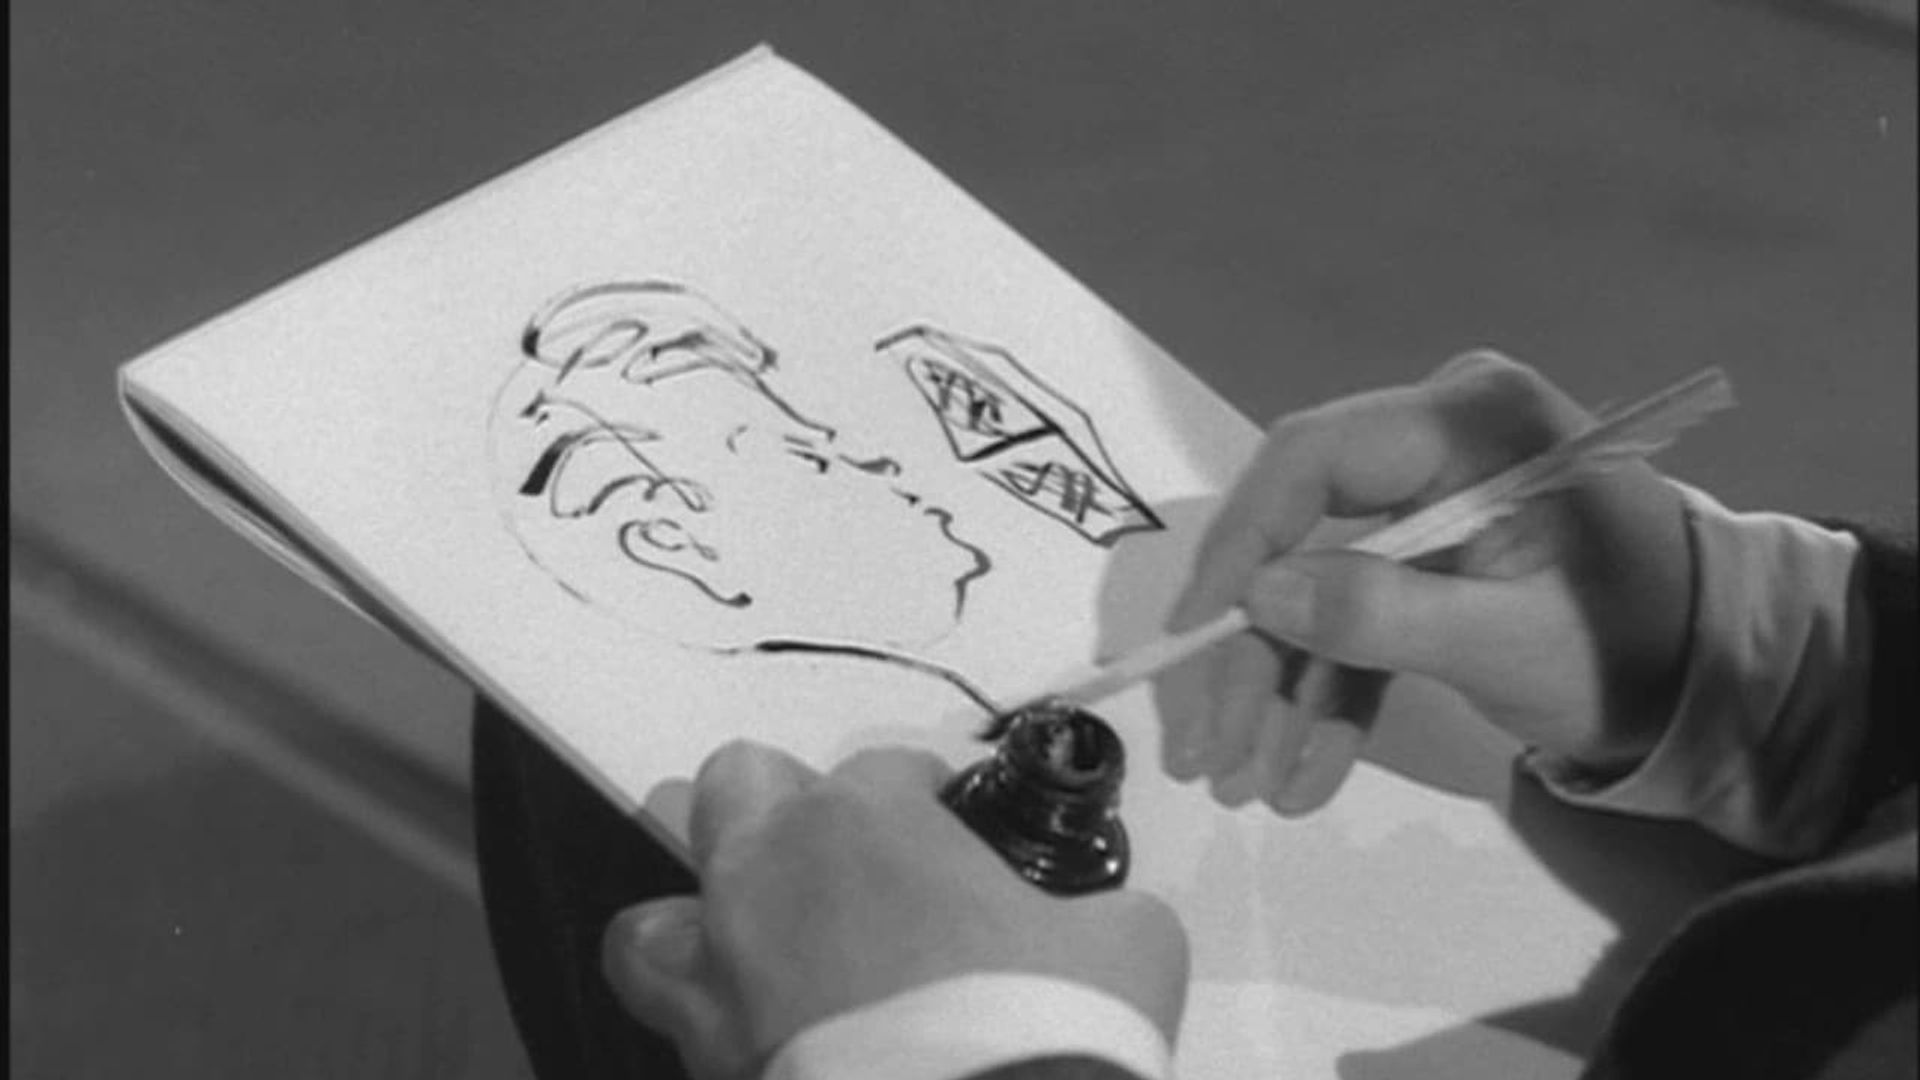 Orson Welles' Sketch Book background